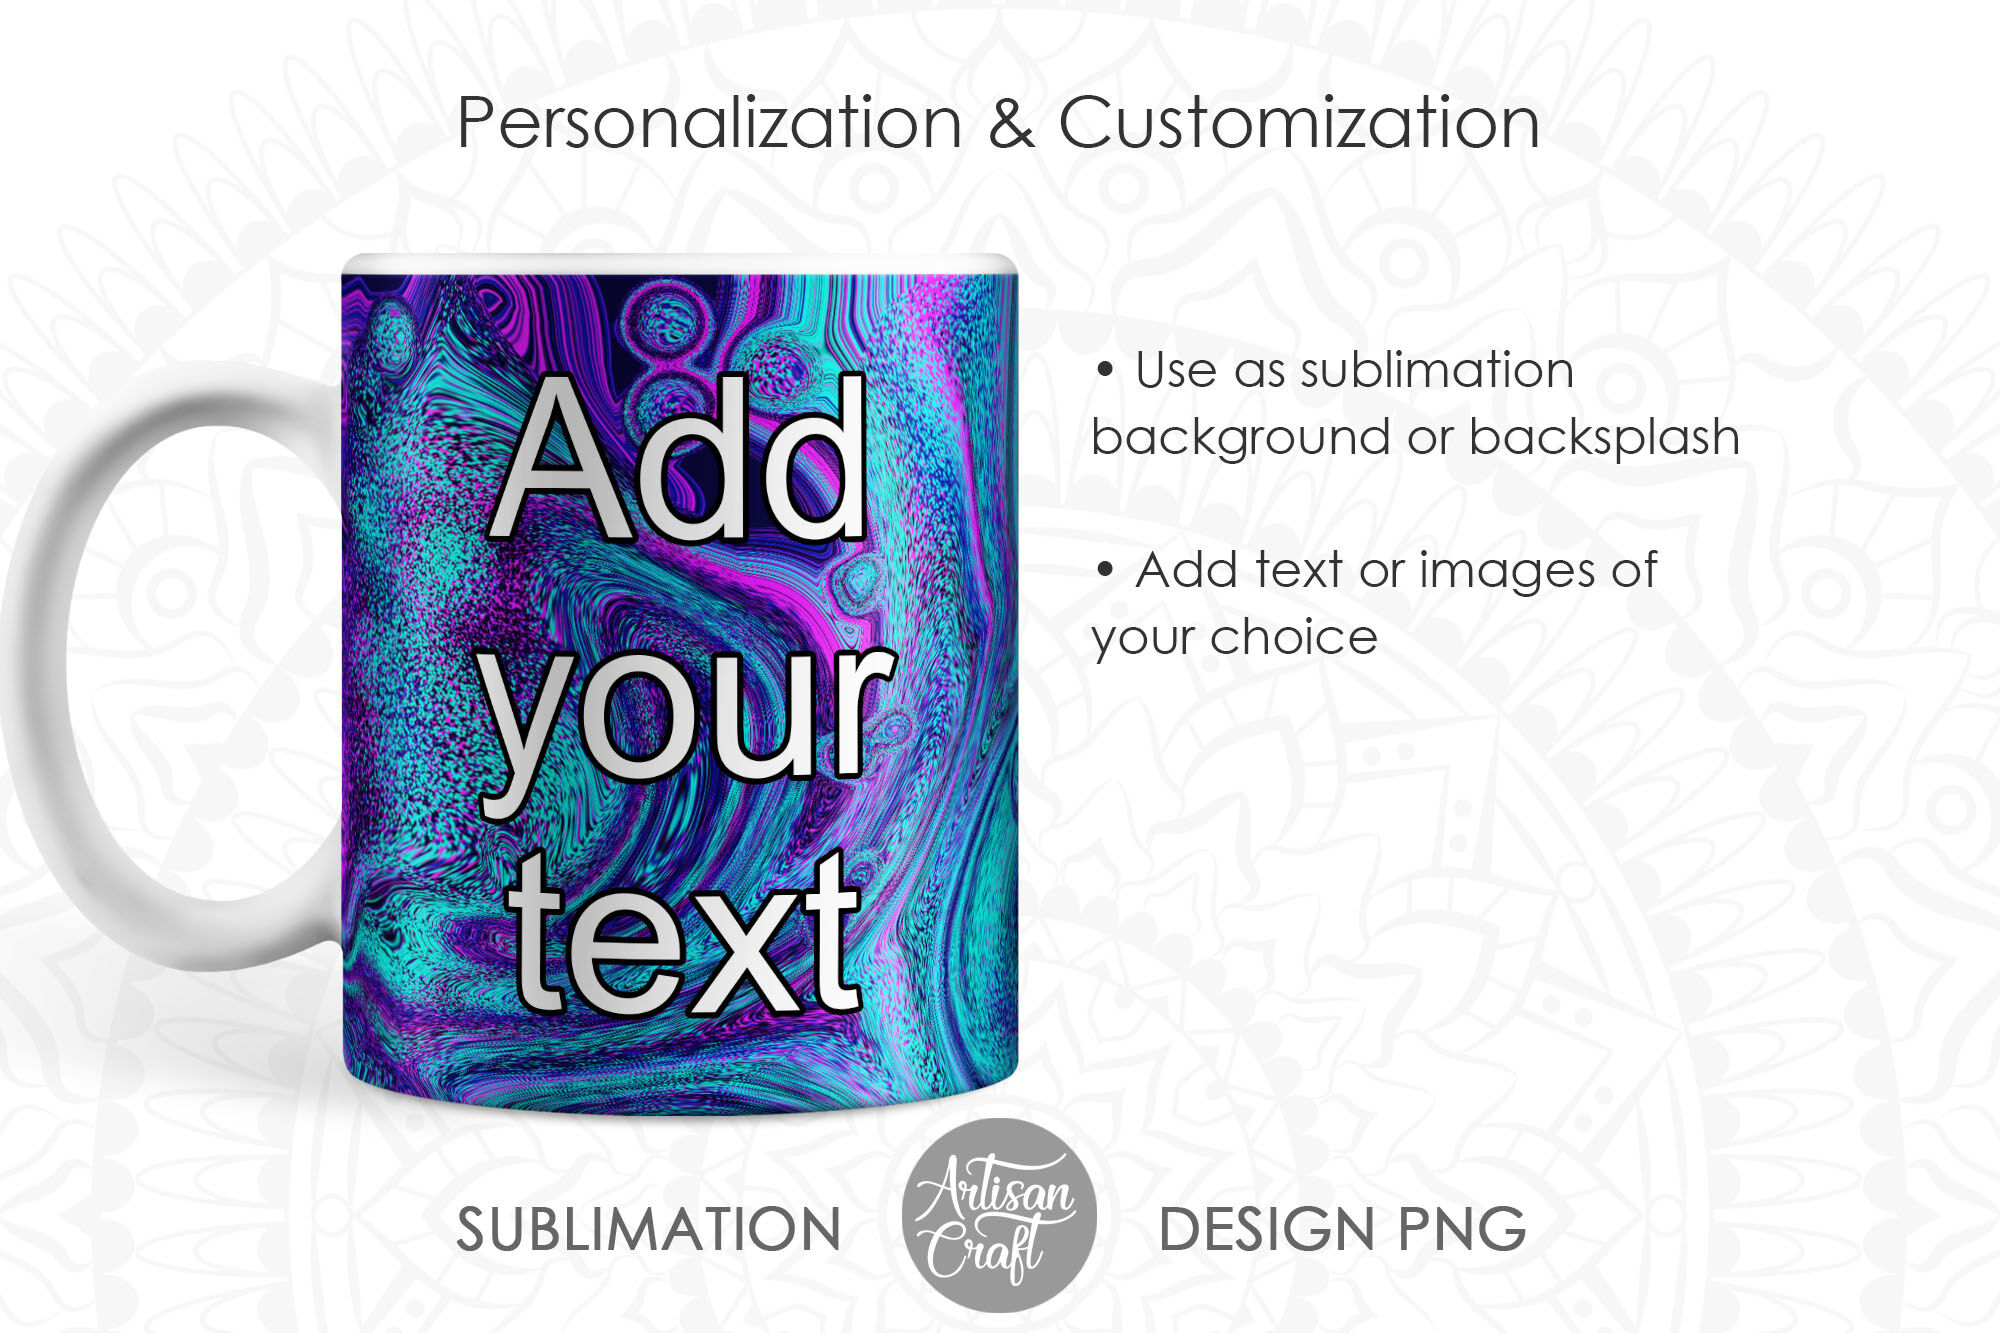 DIGITAL Sublimation Mug Design / Sublimation Mug / Sublimation Design / Mug  Gift Sublimation / Sublimation PNG / Mug PNG / Christmas Mug 